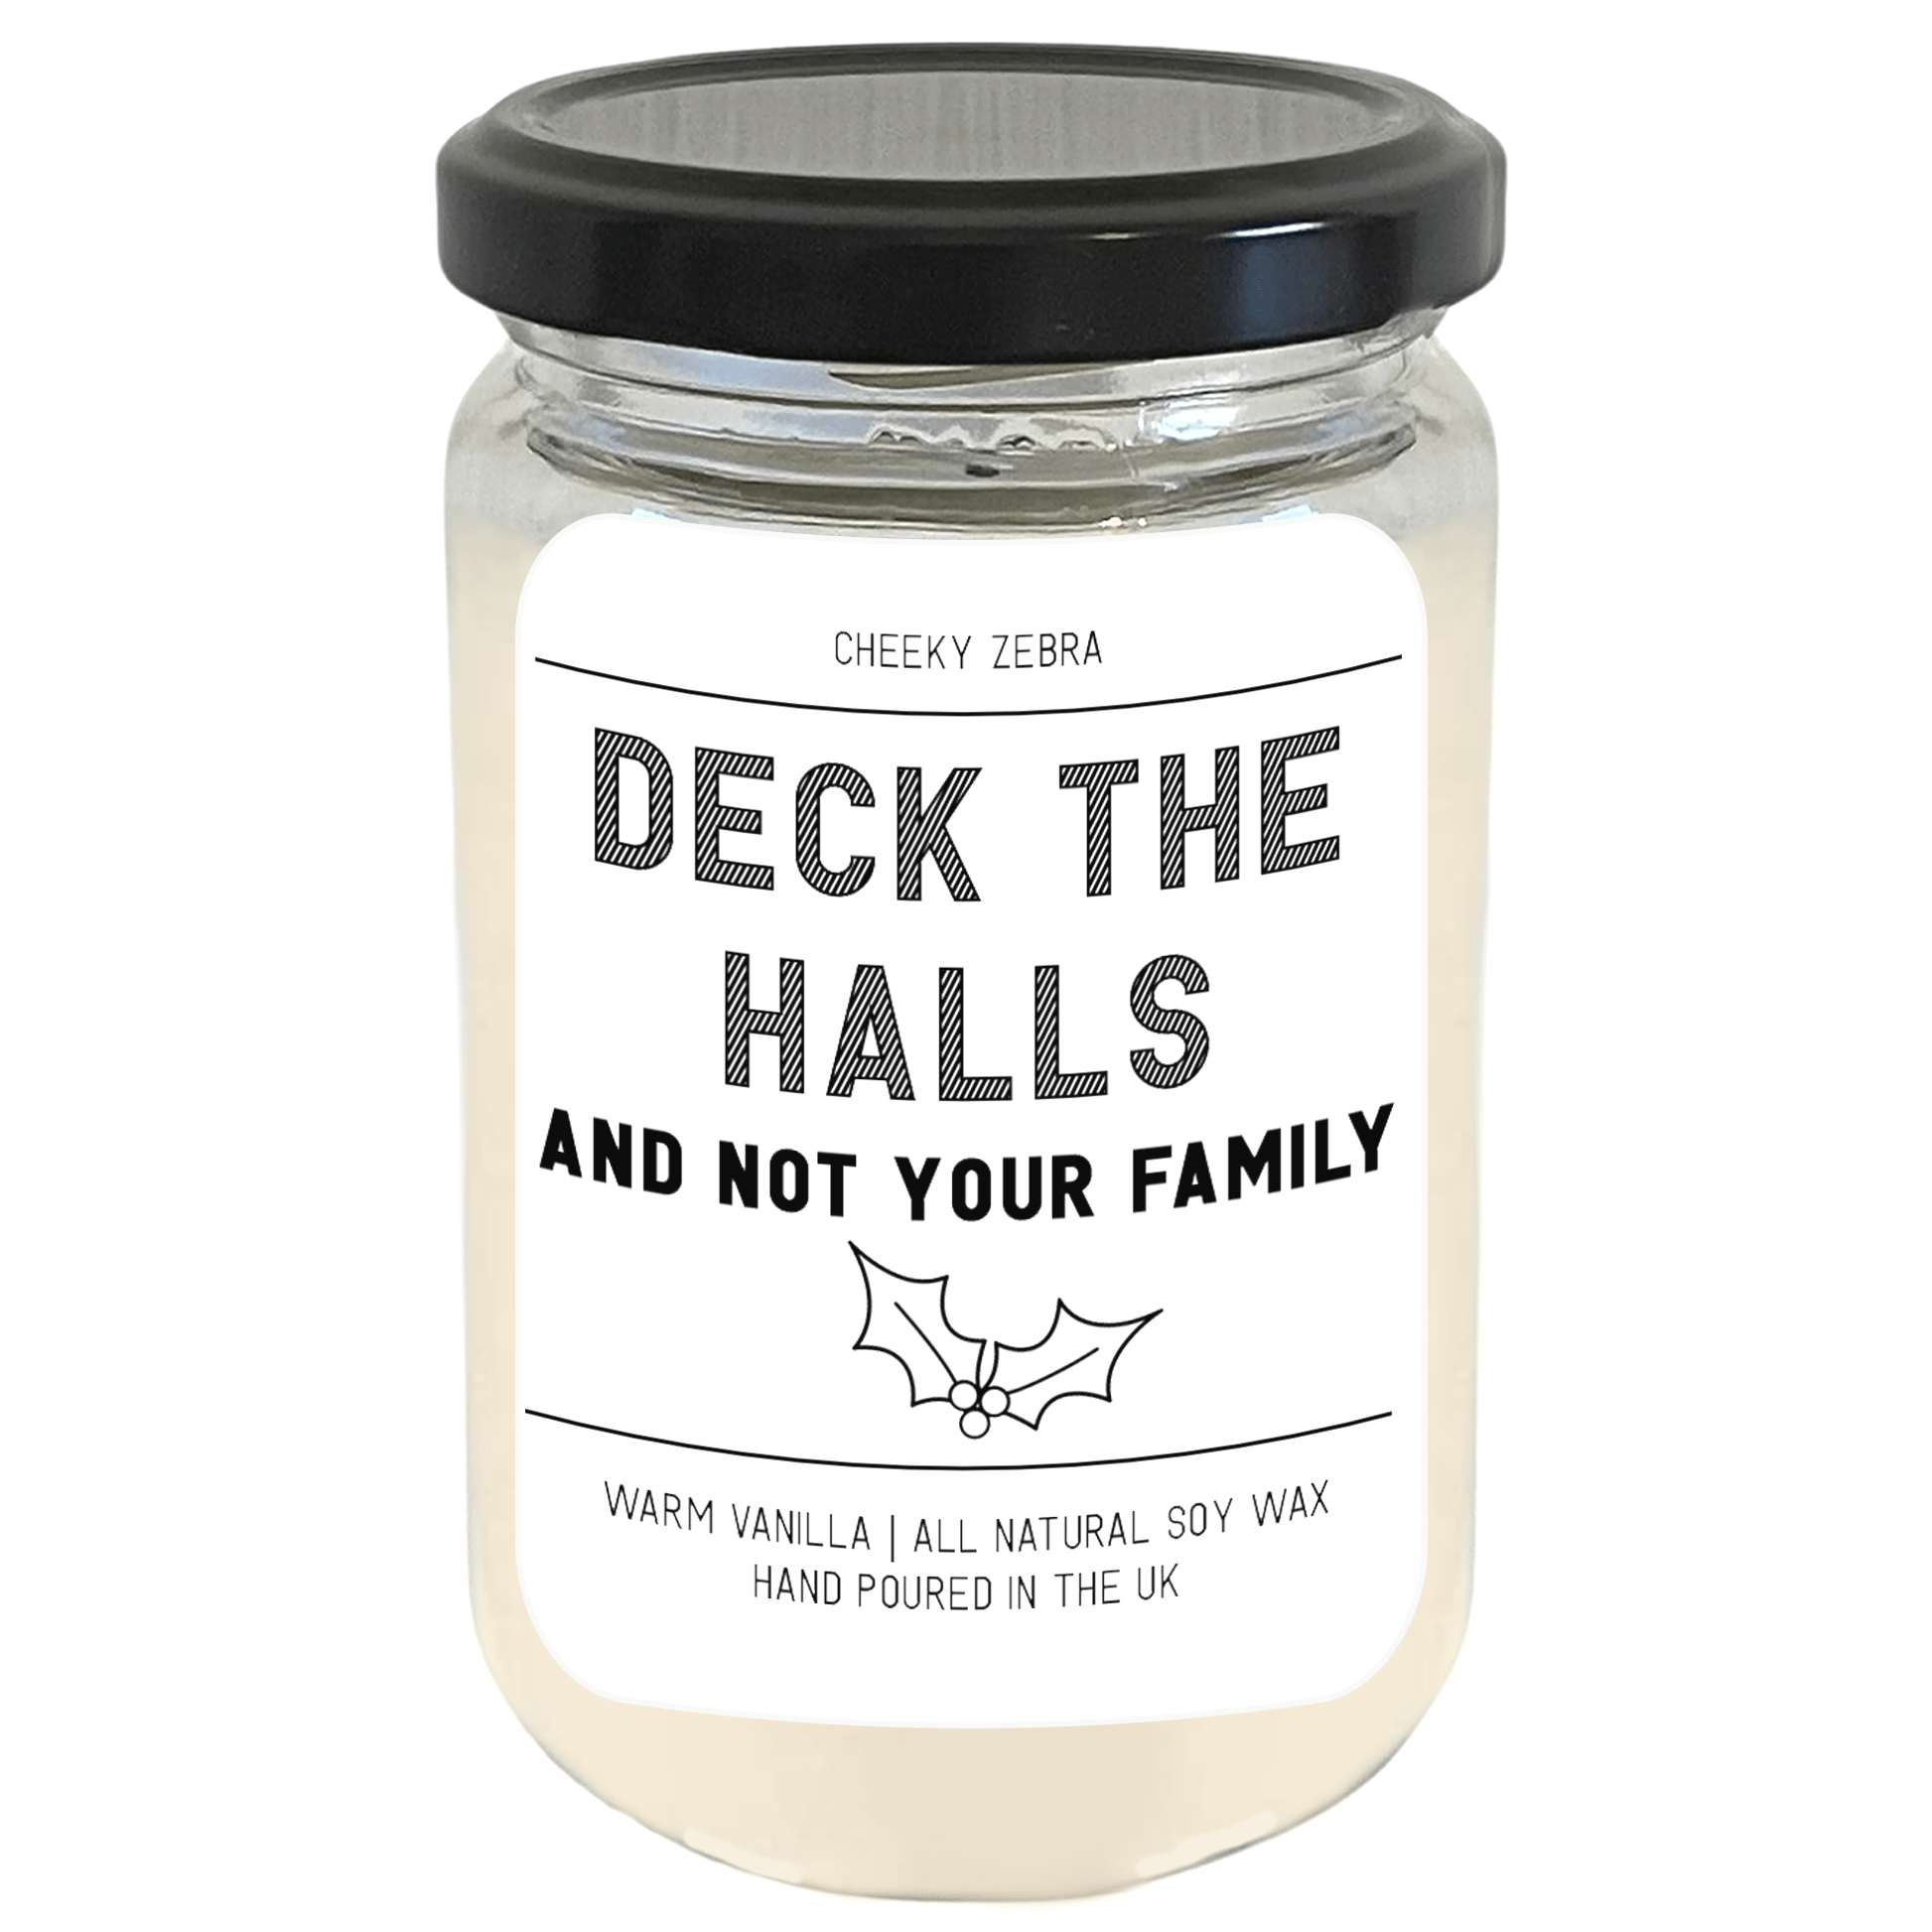 Deck the halls